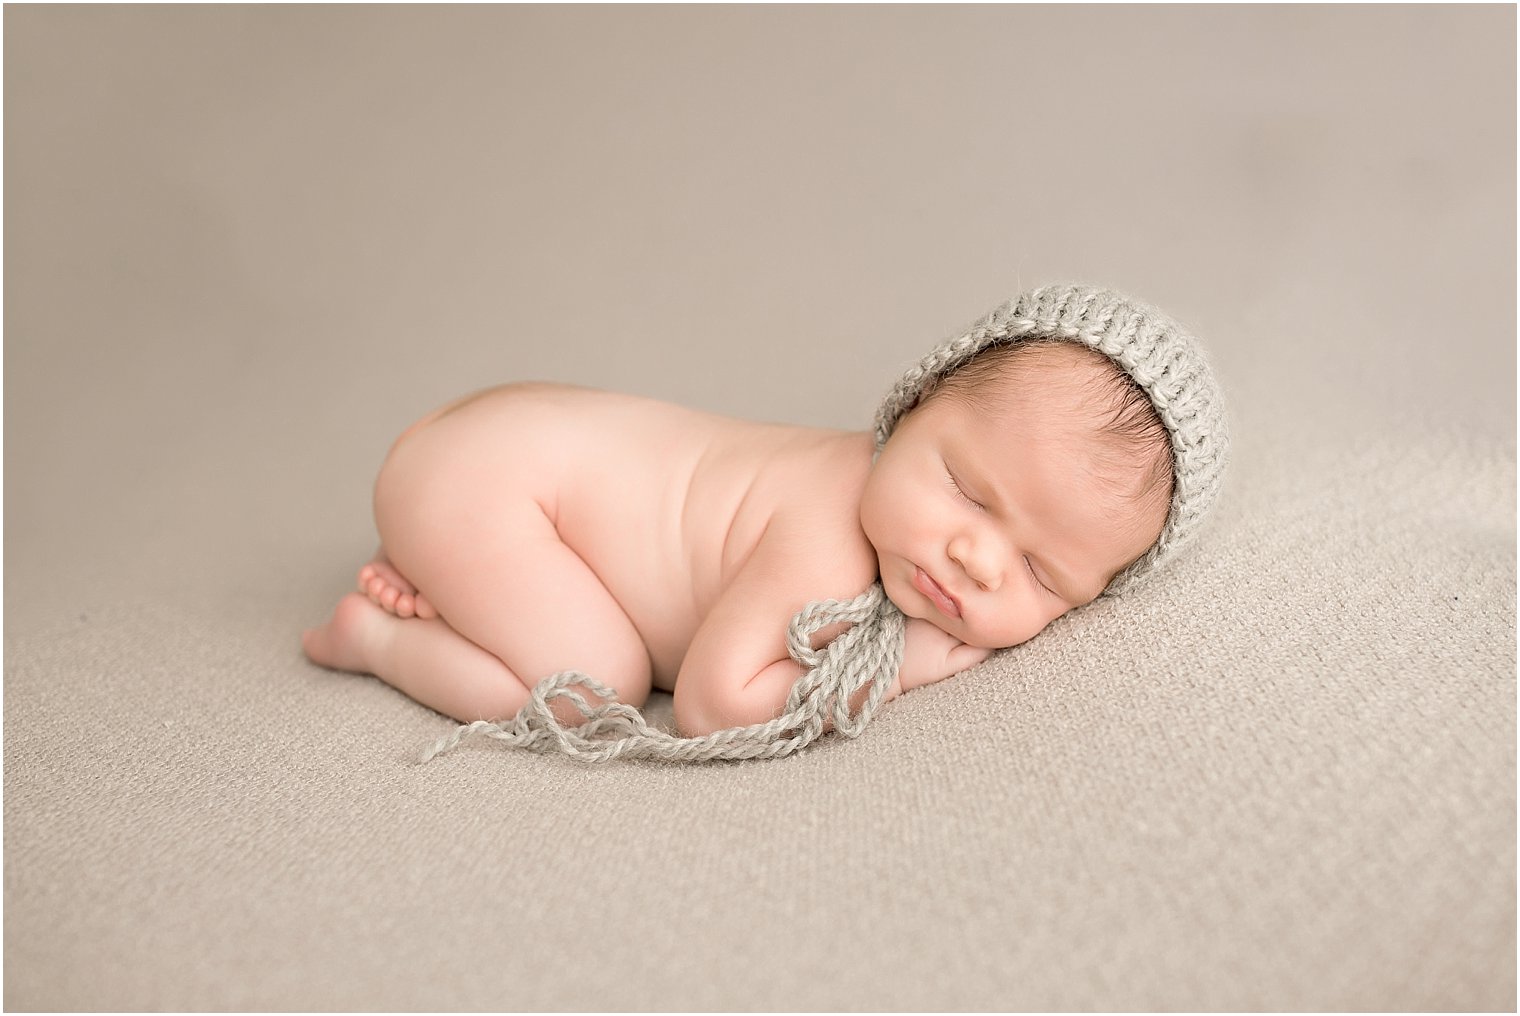 Newborn boy sleeping on gray blanket